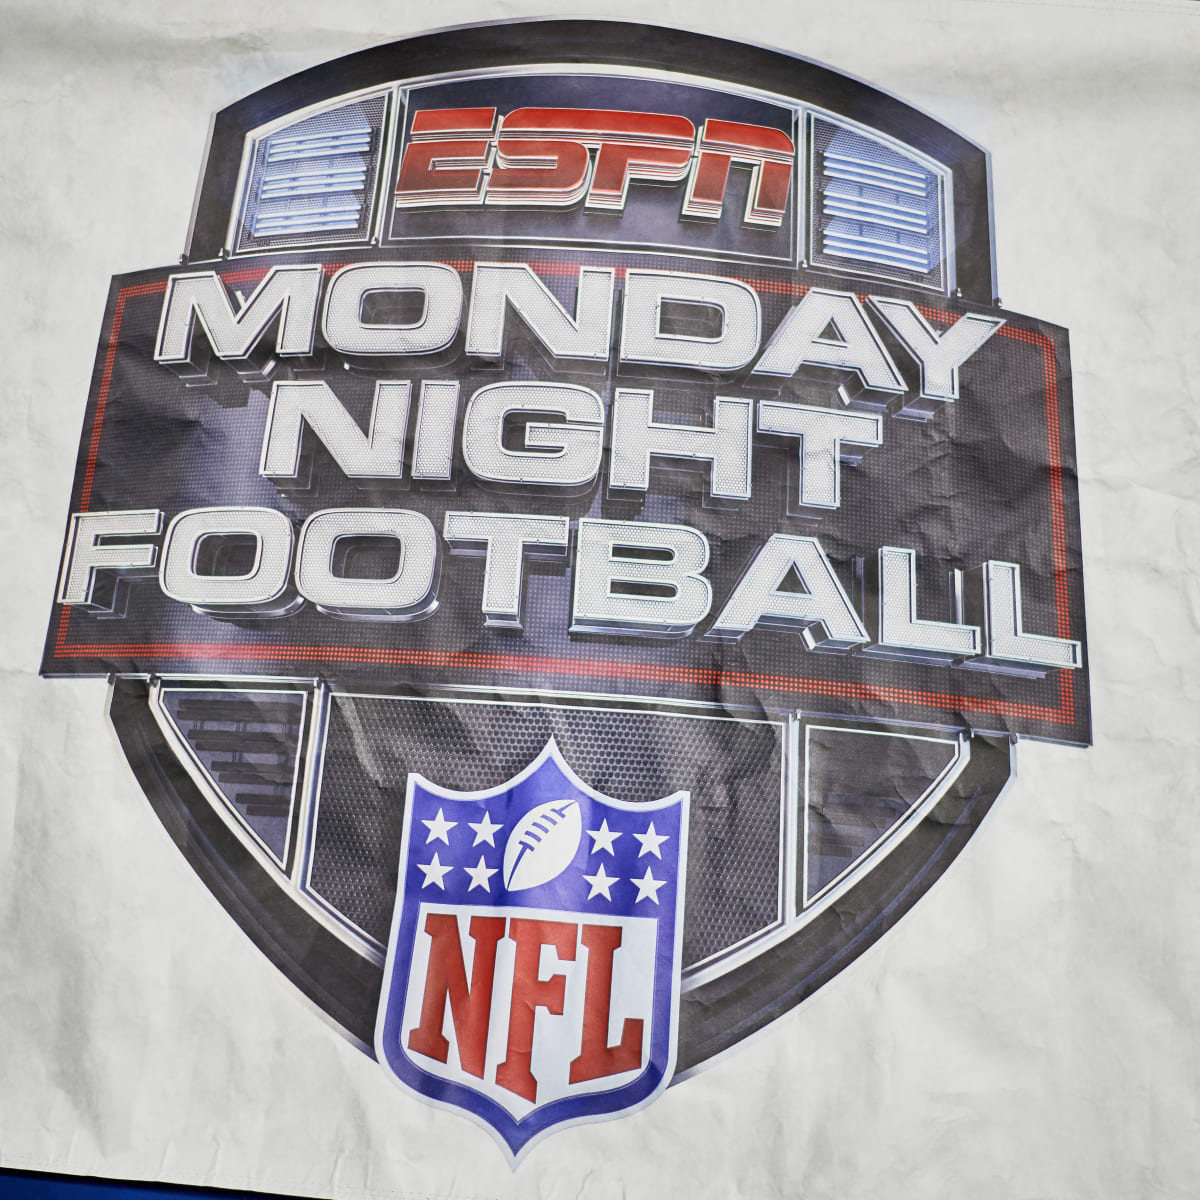 ESPN's Monday Night Football Scores Its Most-Viewed NFL Regular